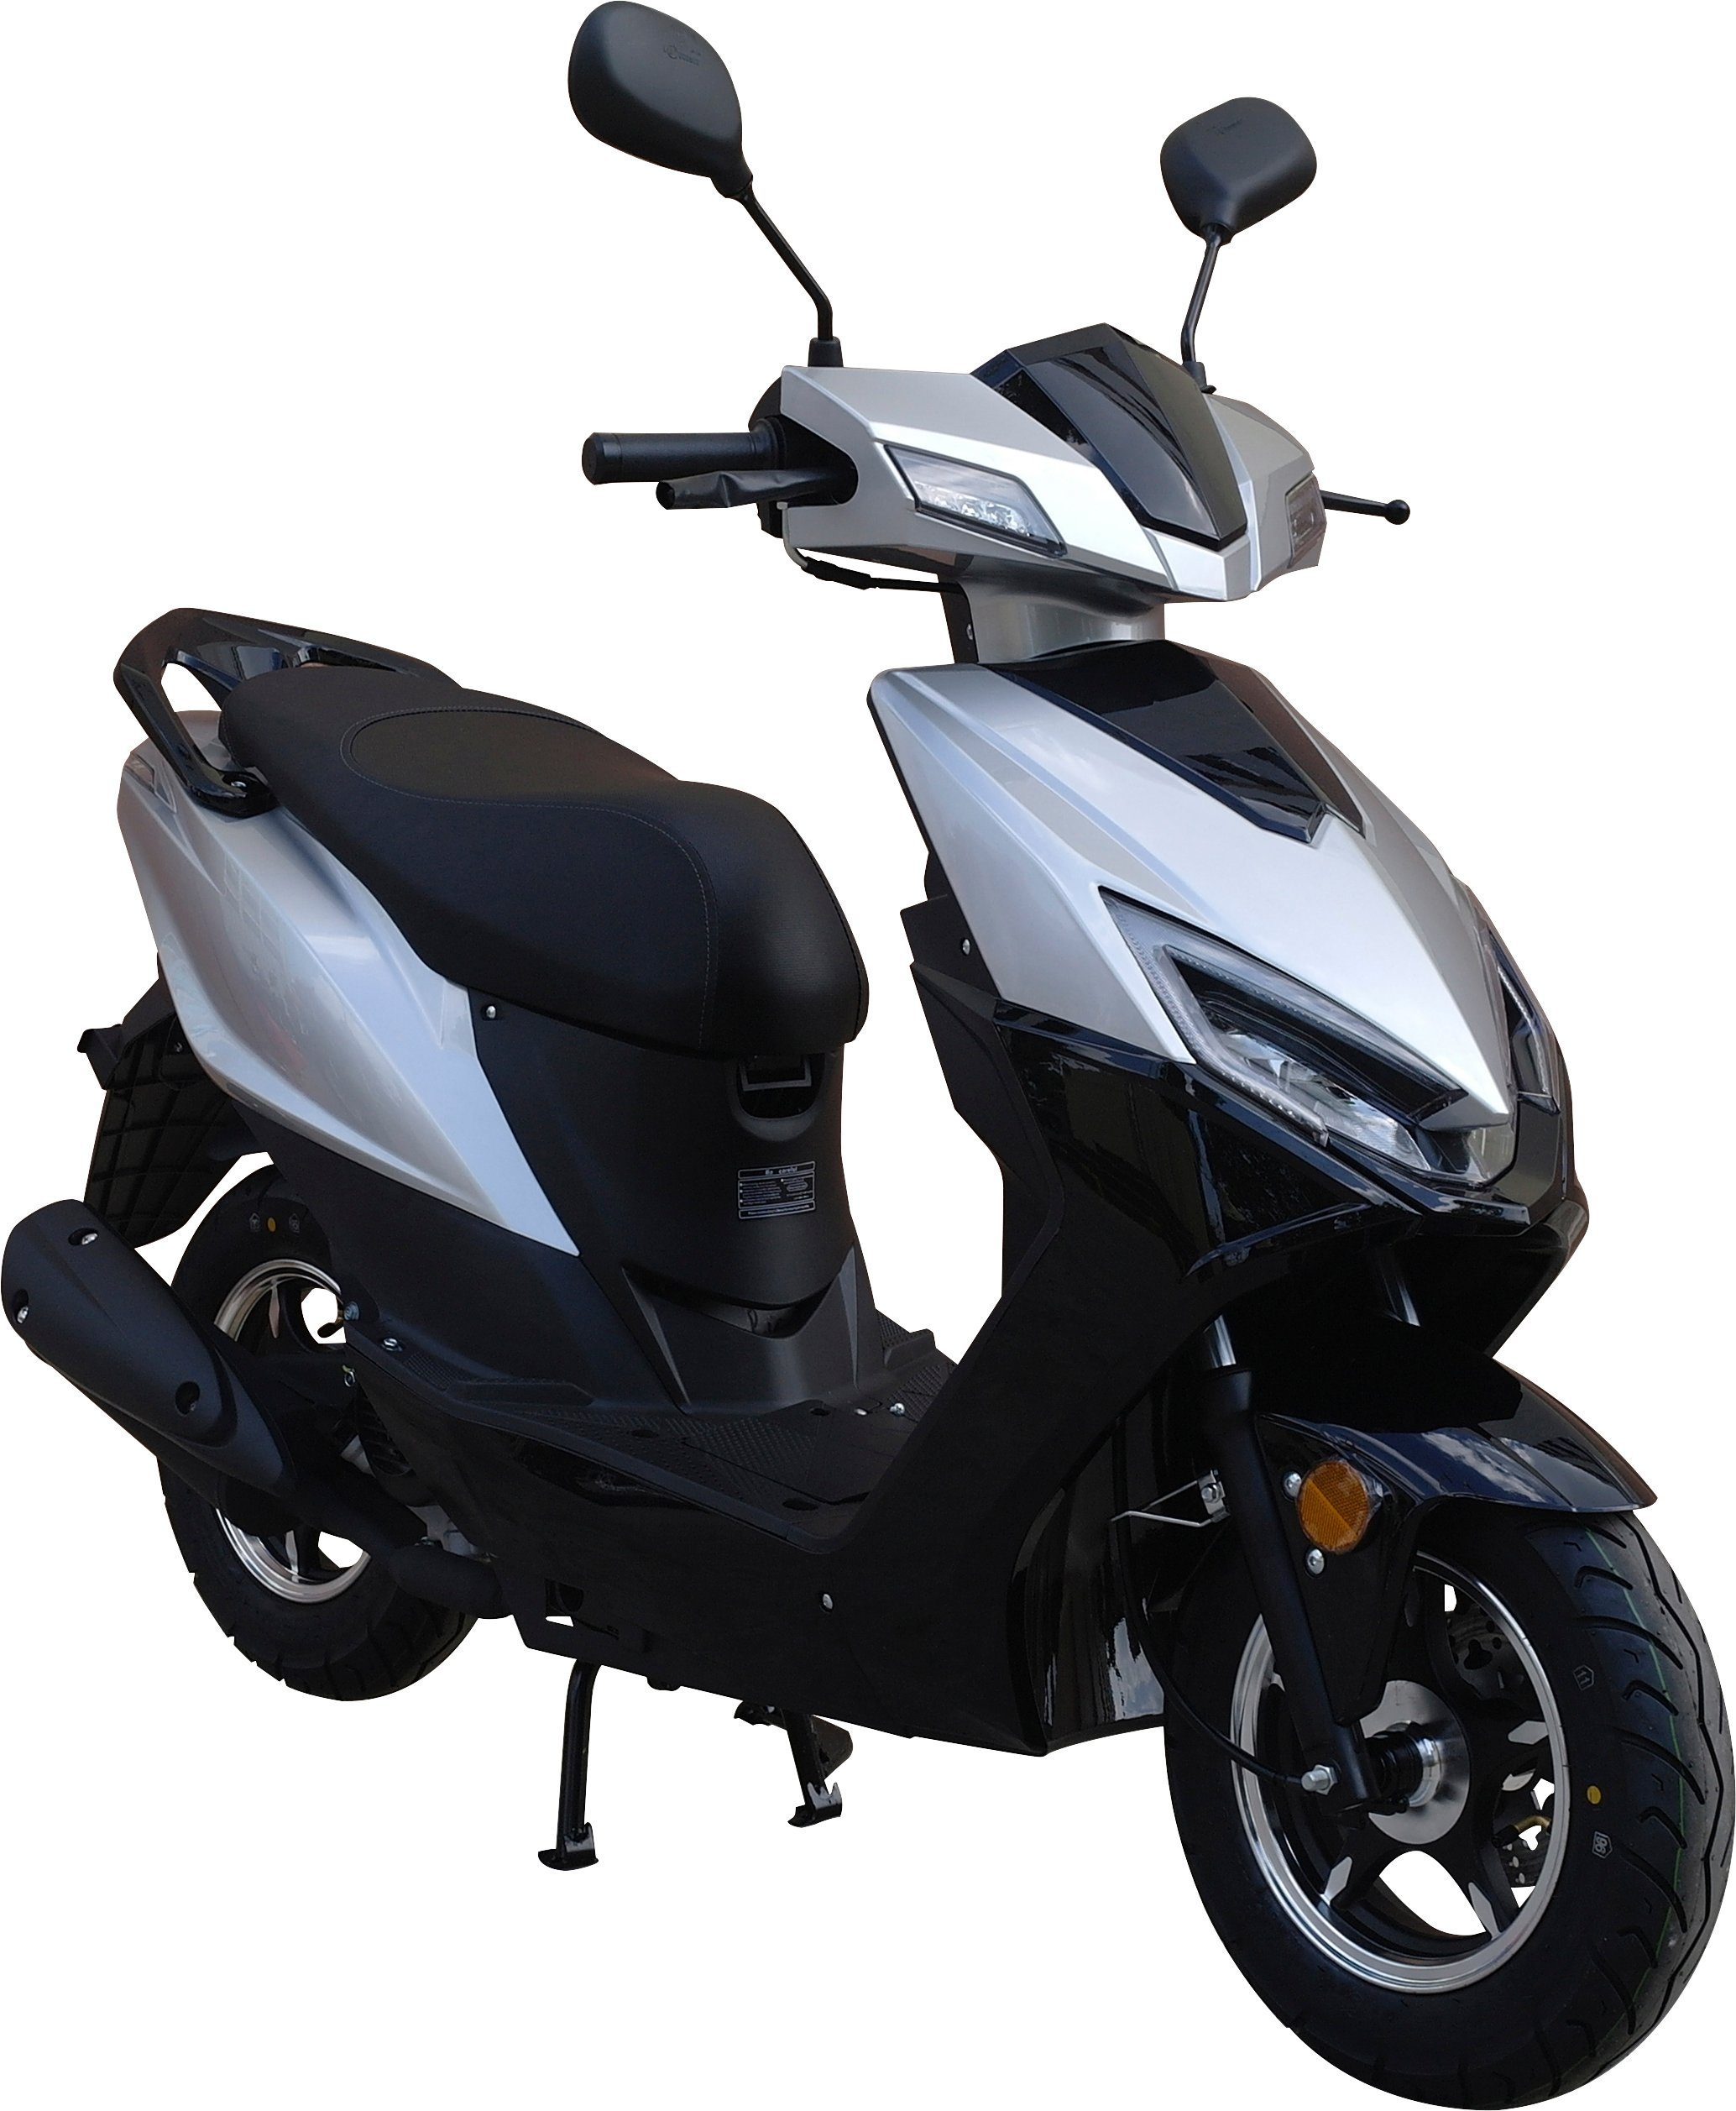 GT UNION Motorroller Sonic X 50-45, 50 ccm, 45 km/h, Euro 5, (Komplett-Set, 2 tlg., mit Topcase), inkl. Topcase silber-schwarz | Motorroller